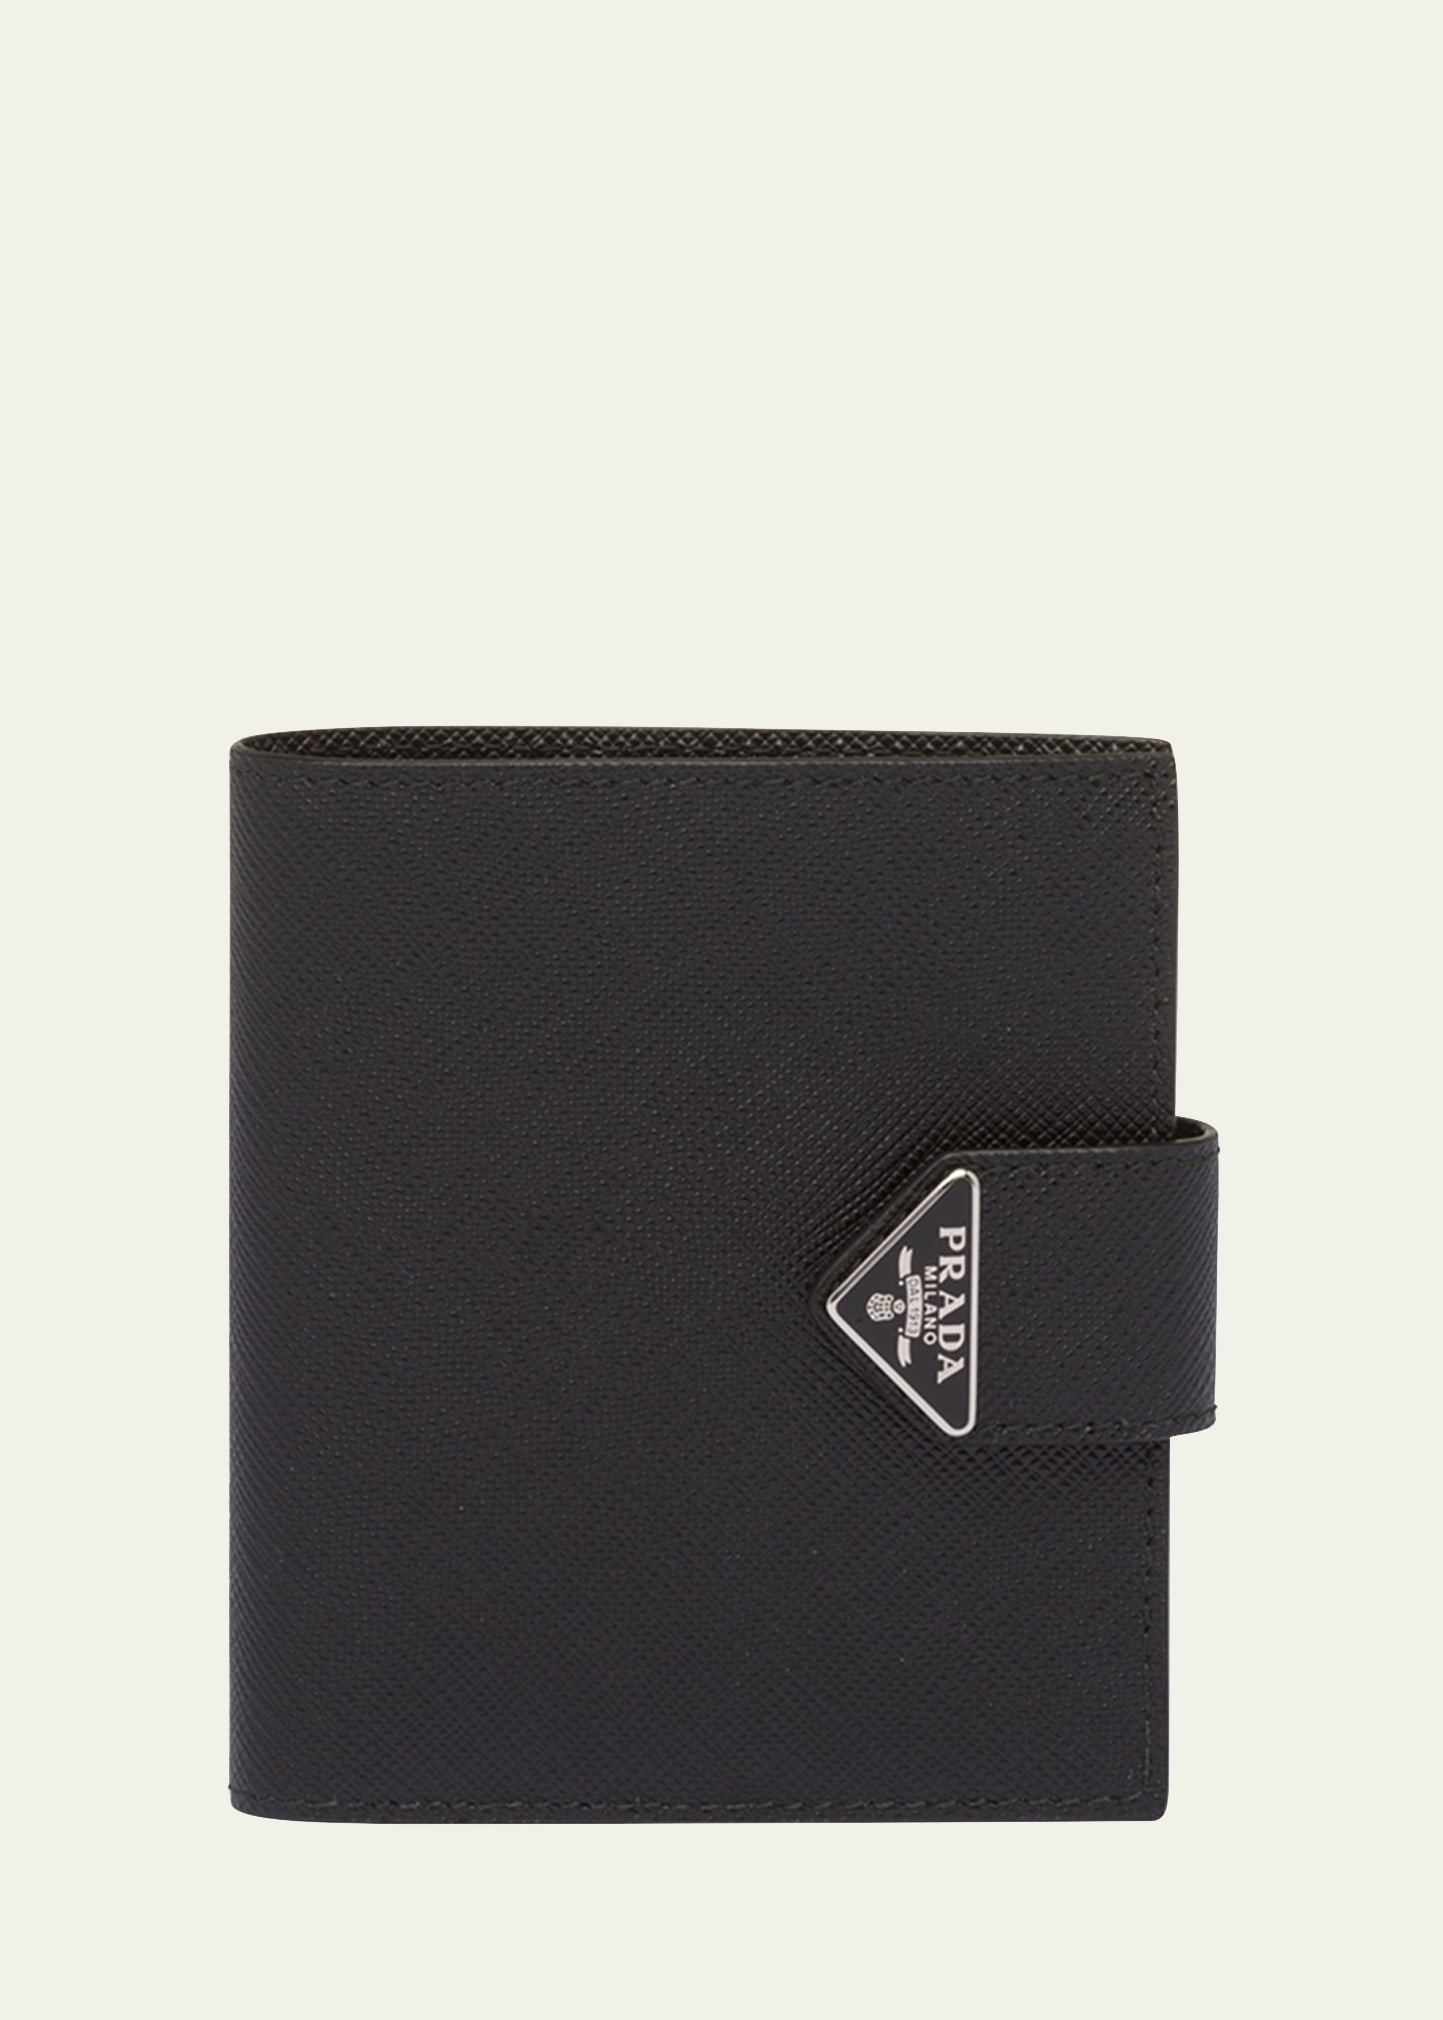 Prada Men's Saffiano Leather Snap Bifold Wallet